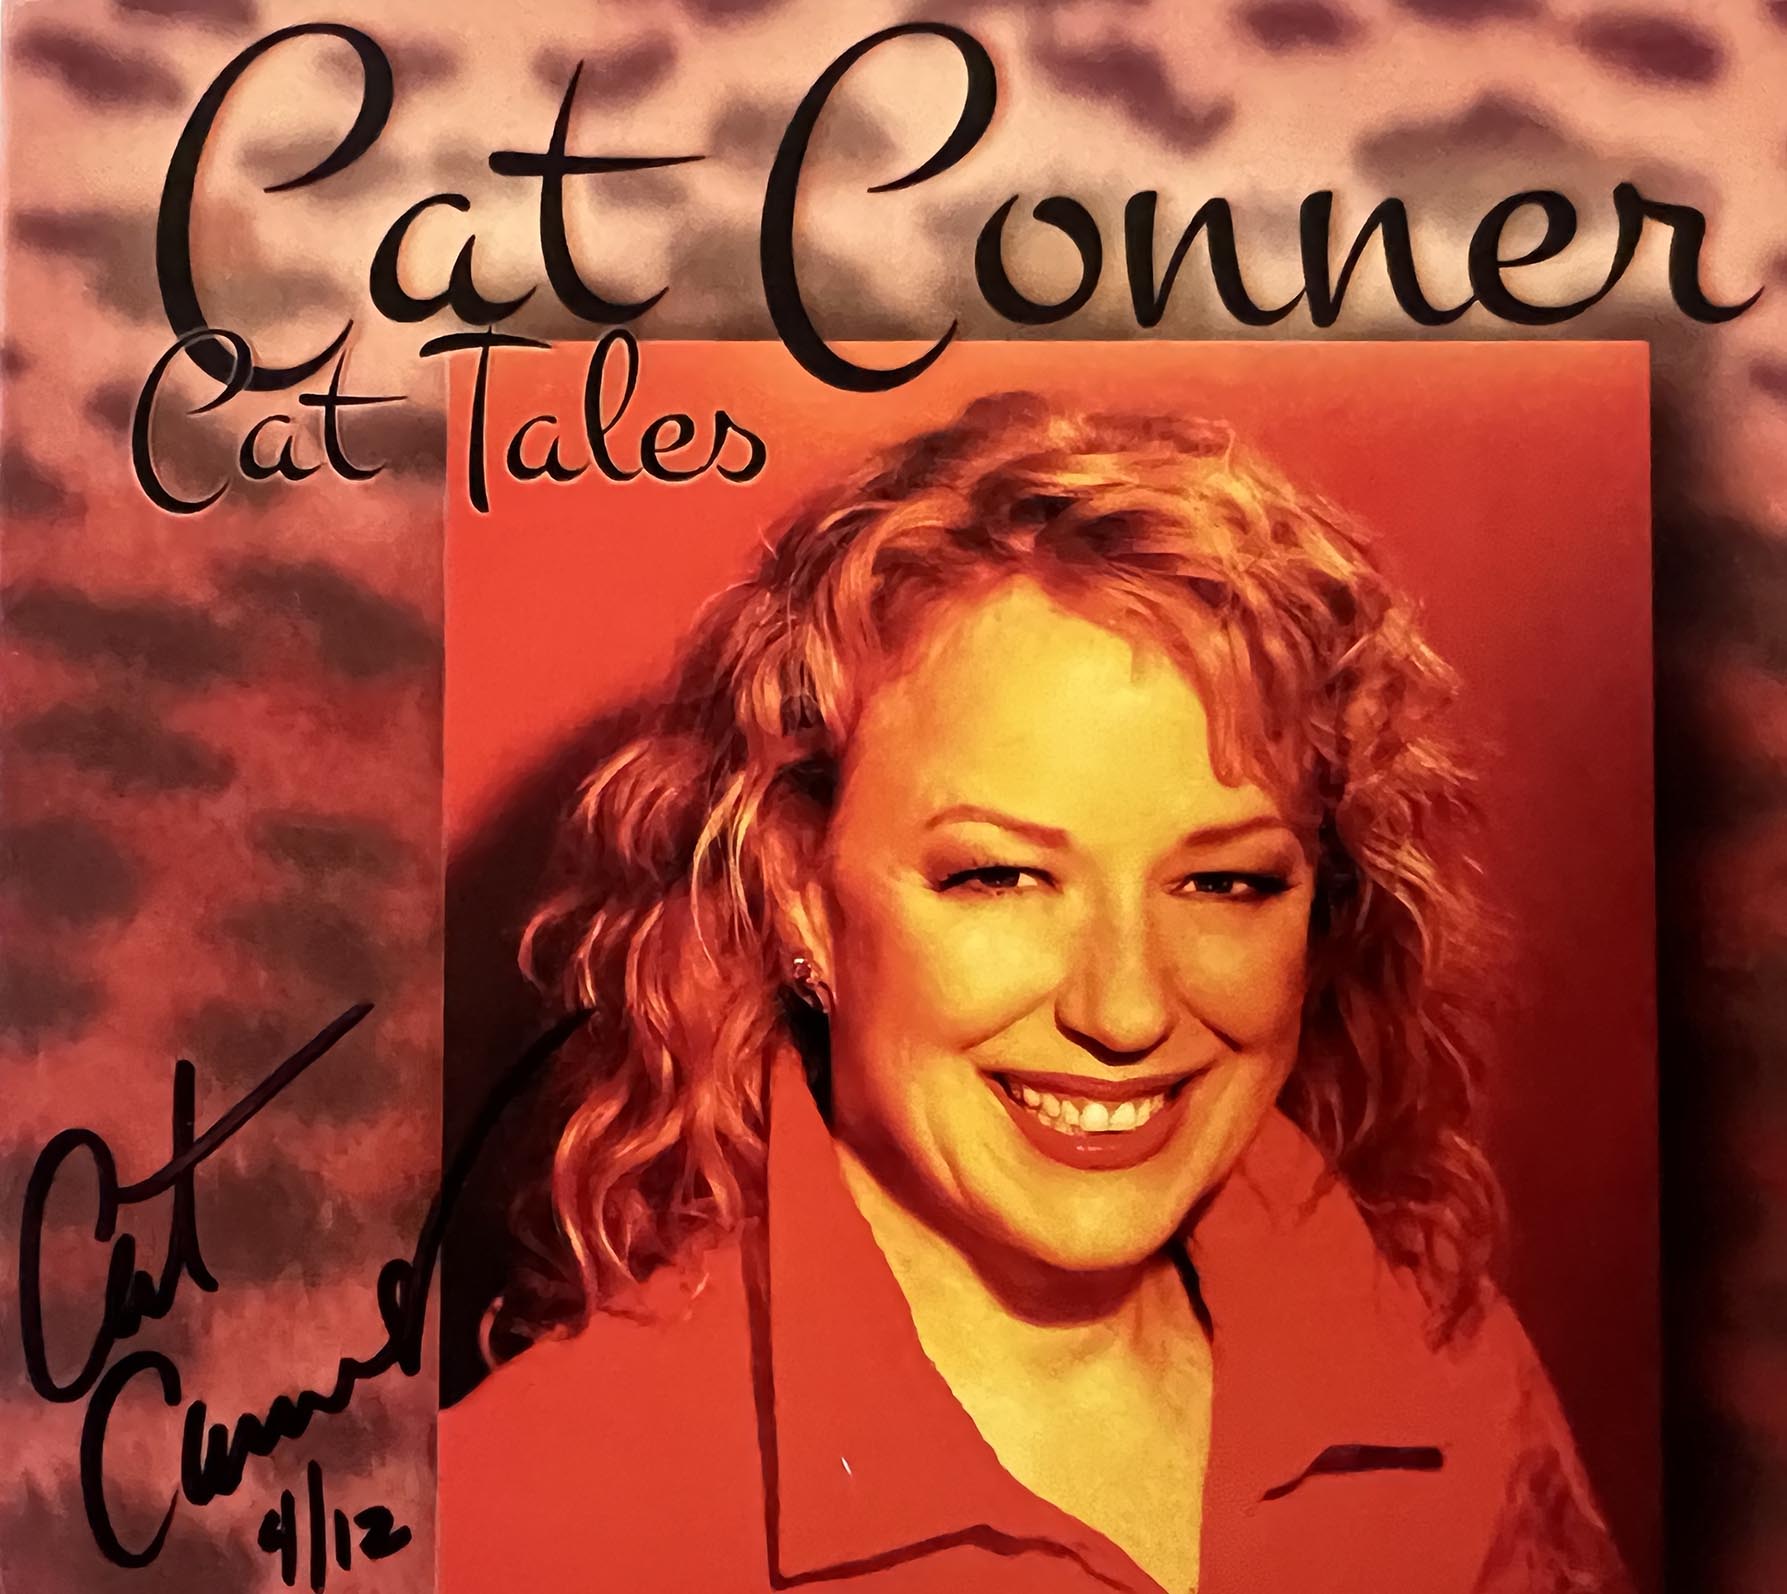 Cat Conner signed Cat Tales CD